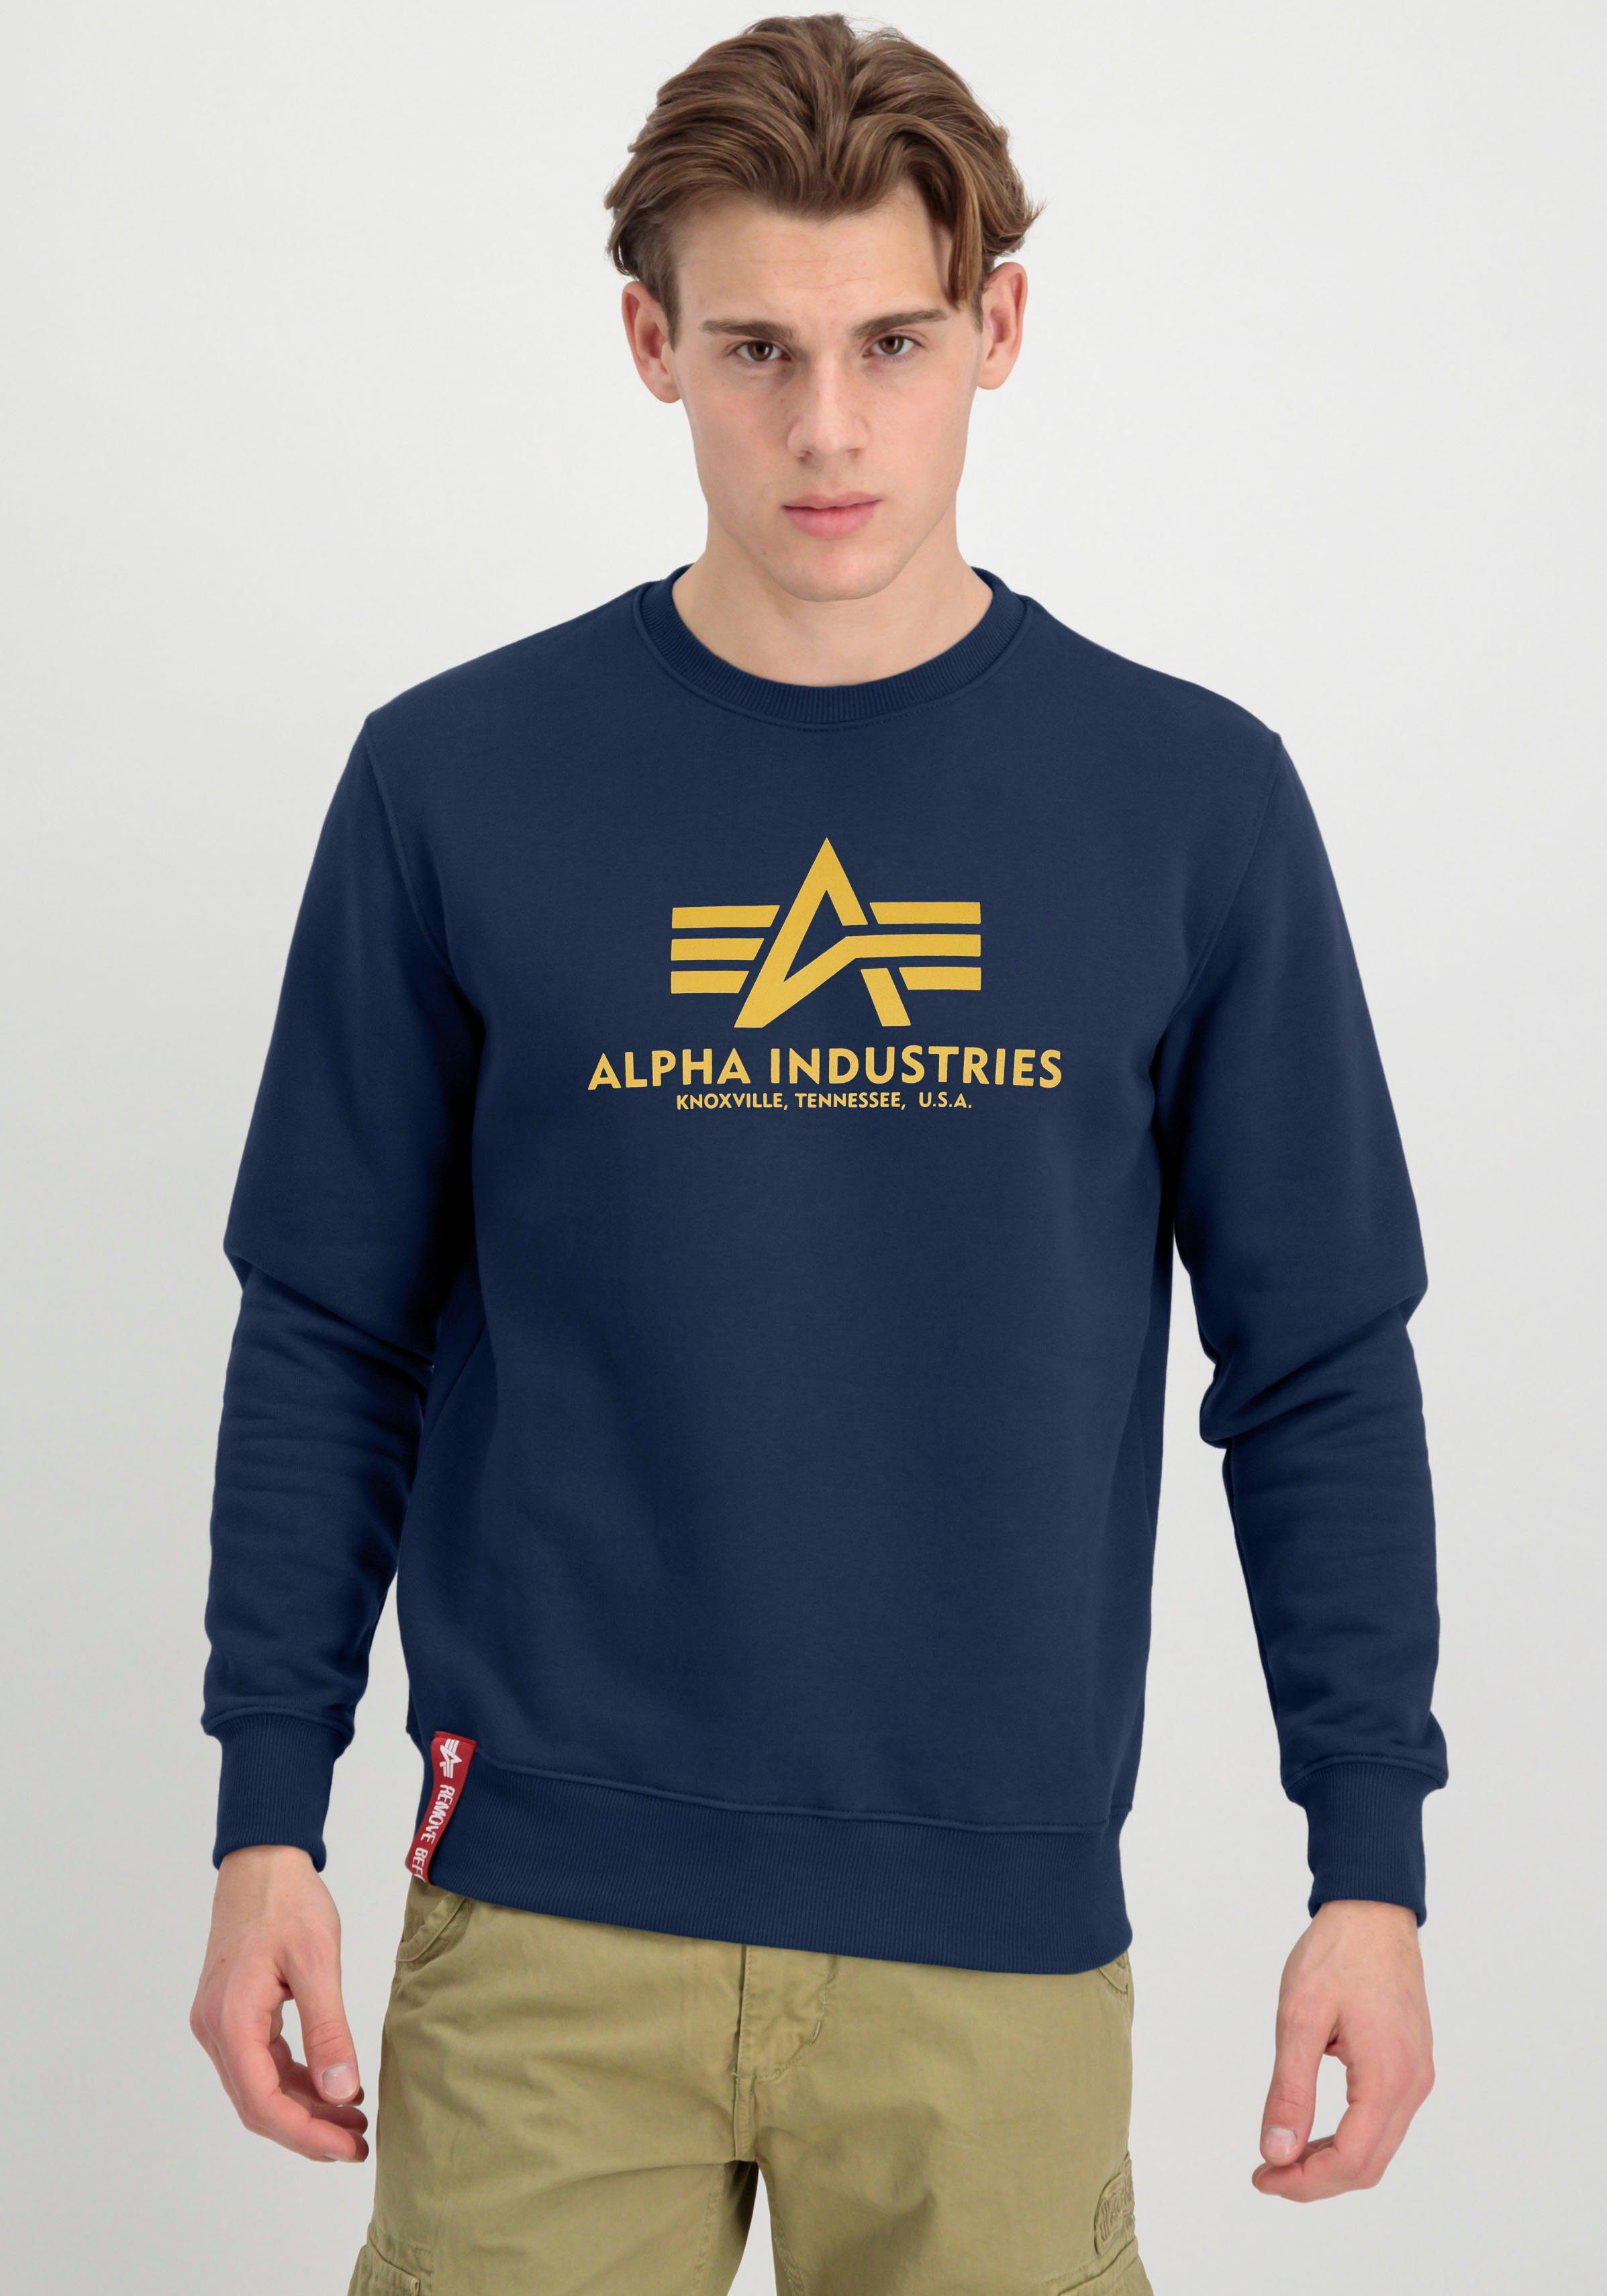 Sparangebote Alpha Industries Sweatshirt Sweater Basic new navy